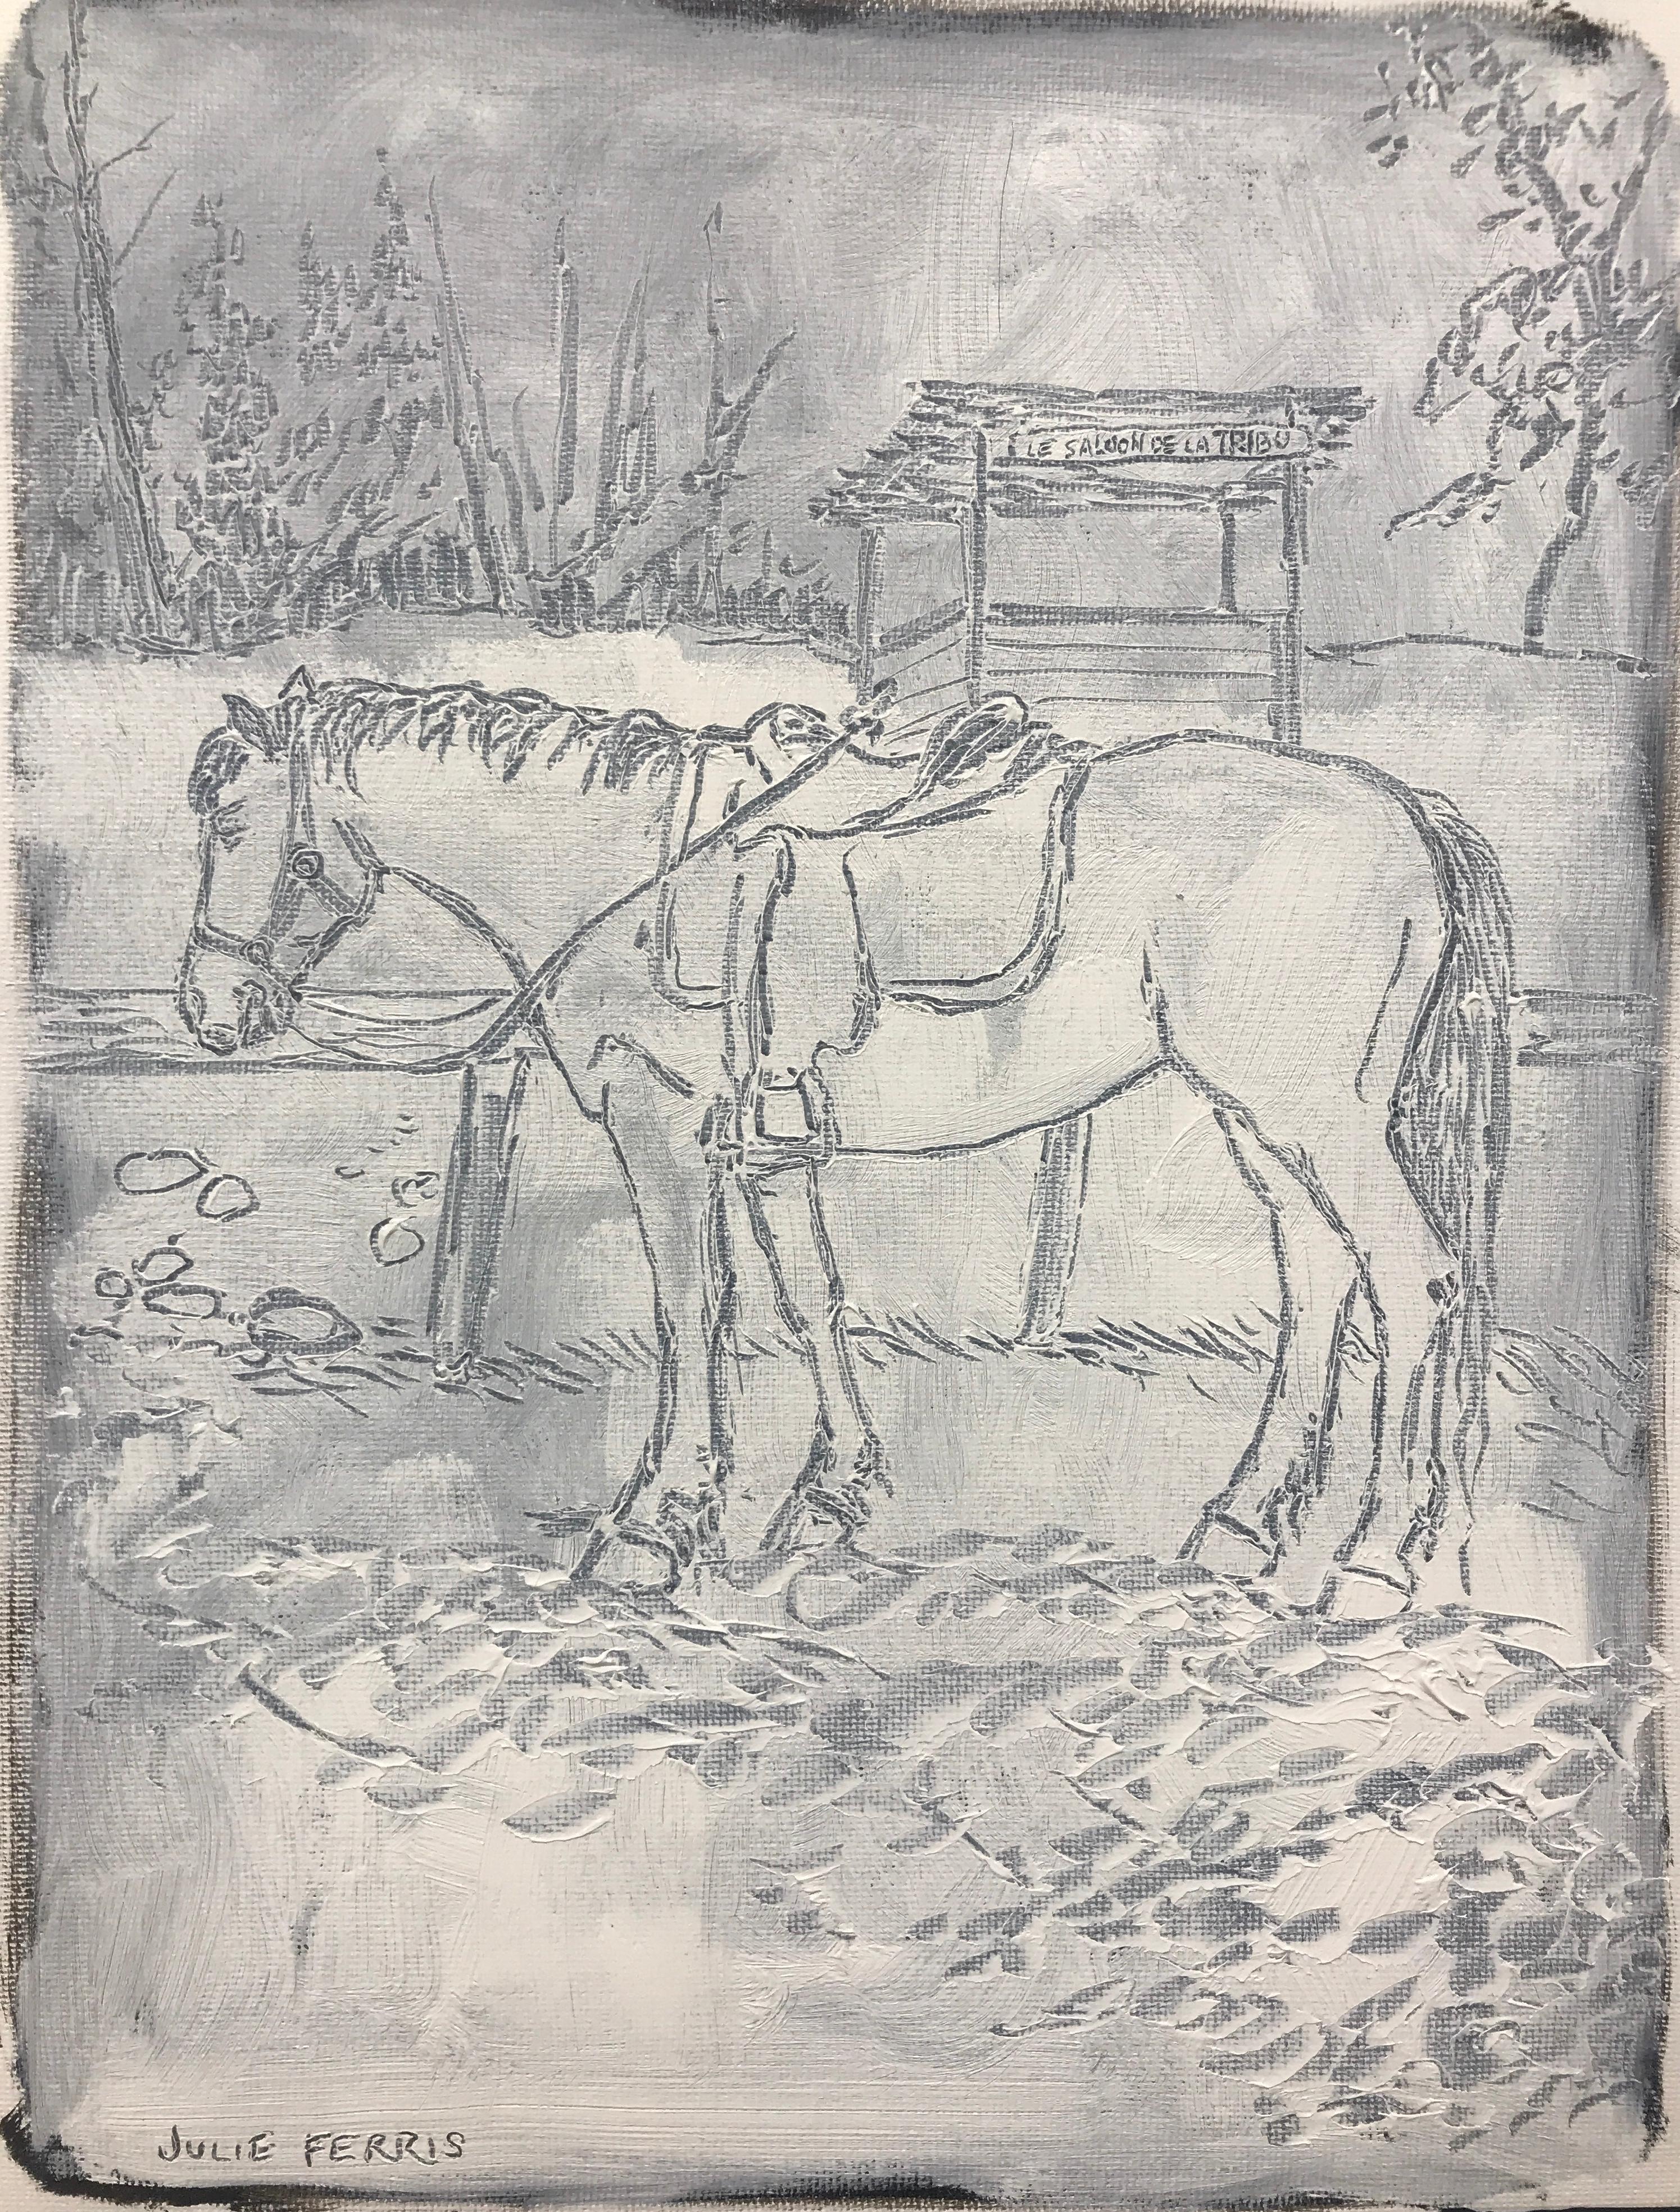 Julie Ferris Animal Painting - "At Ease" - Horse Painting - Sketch - George Stubbs